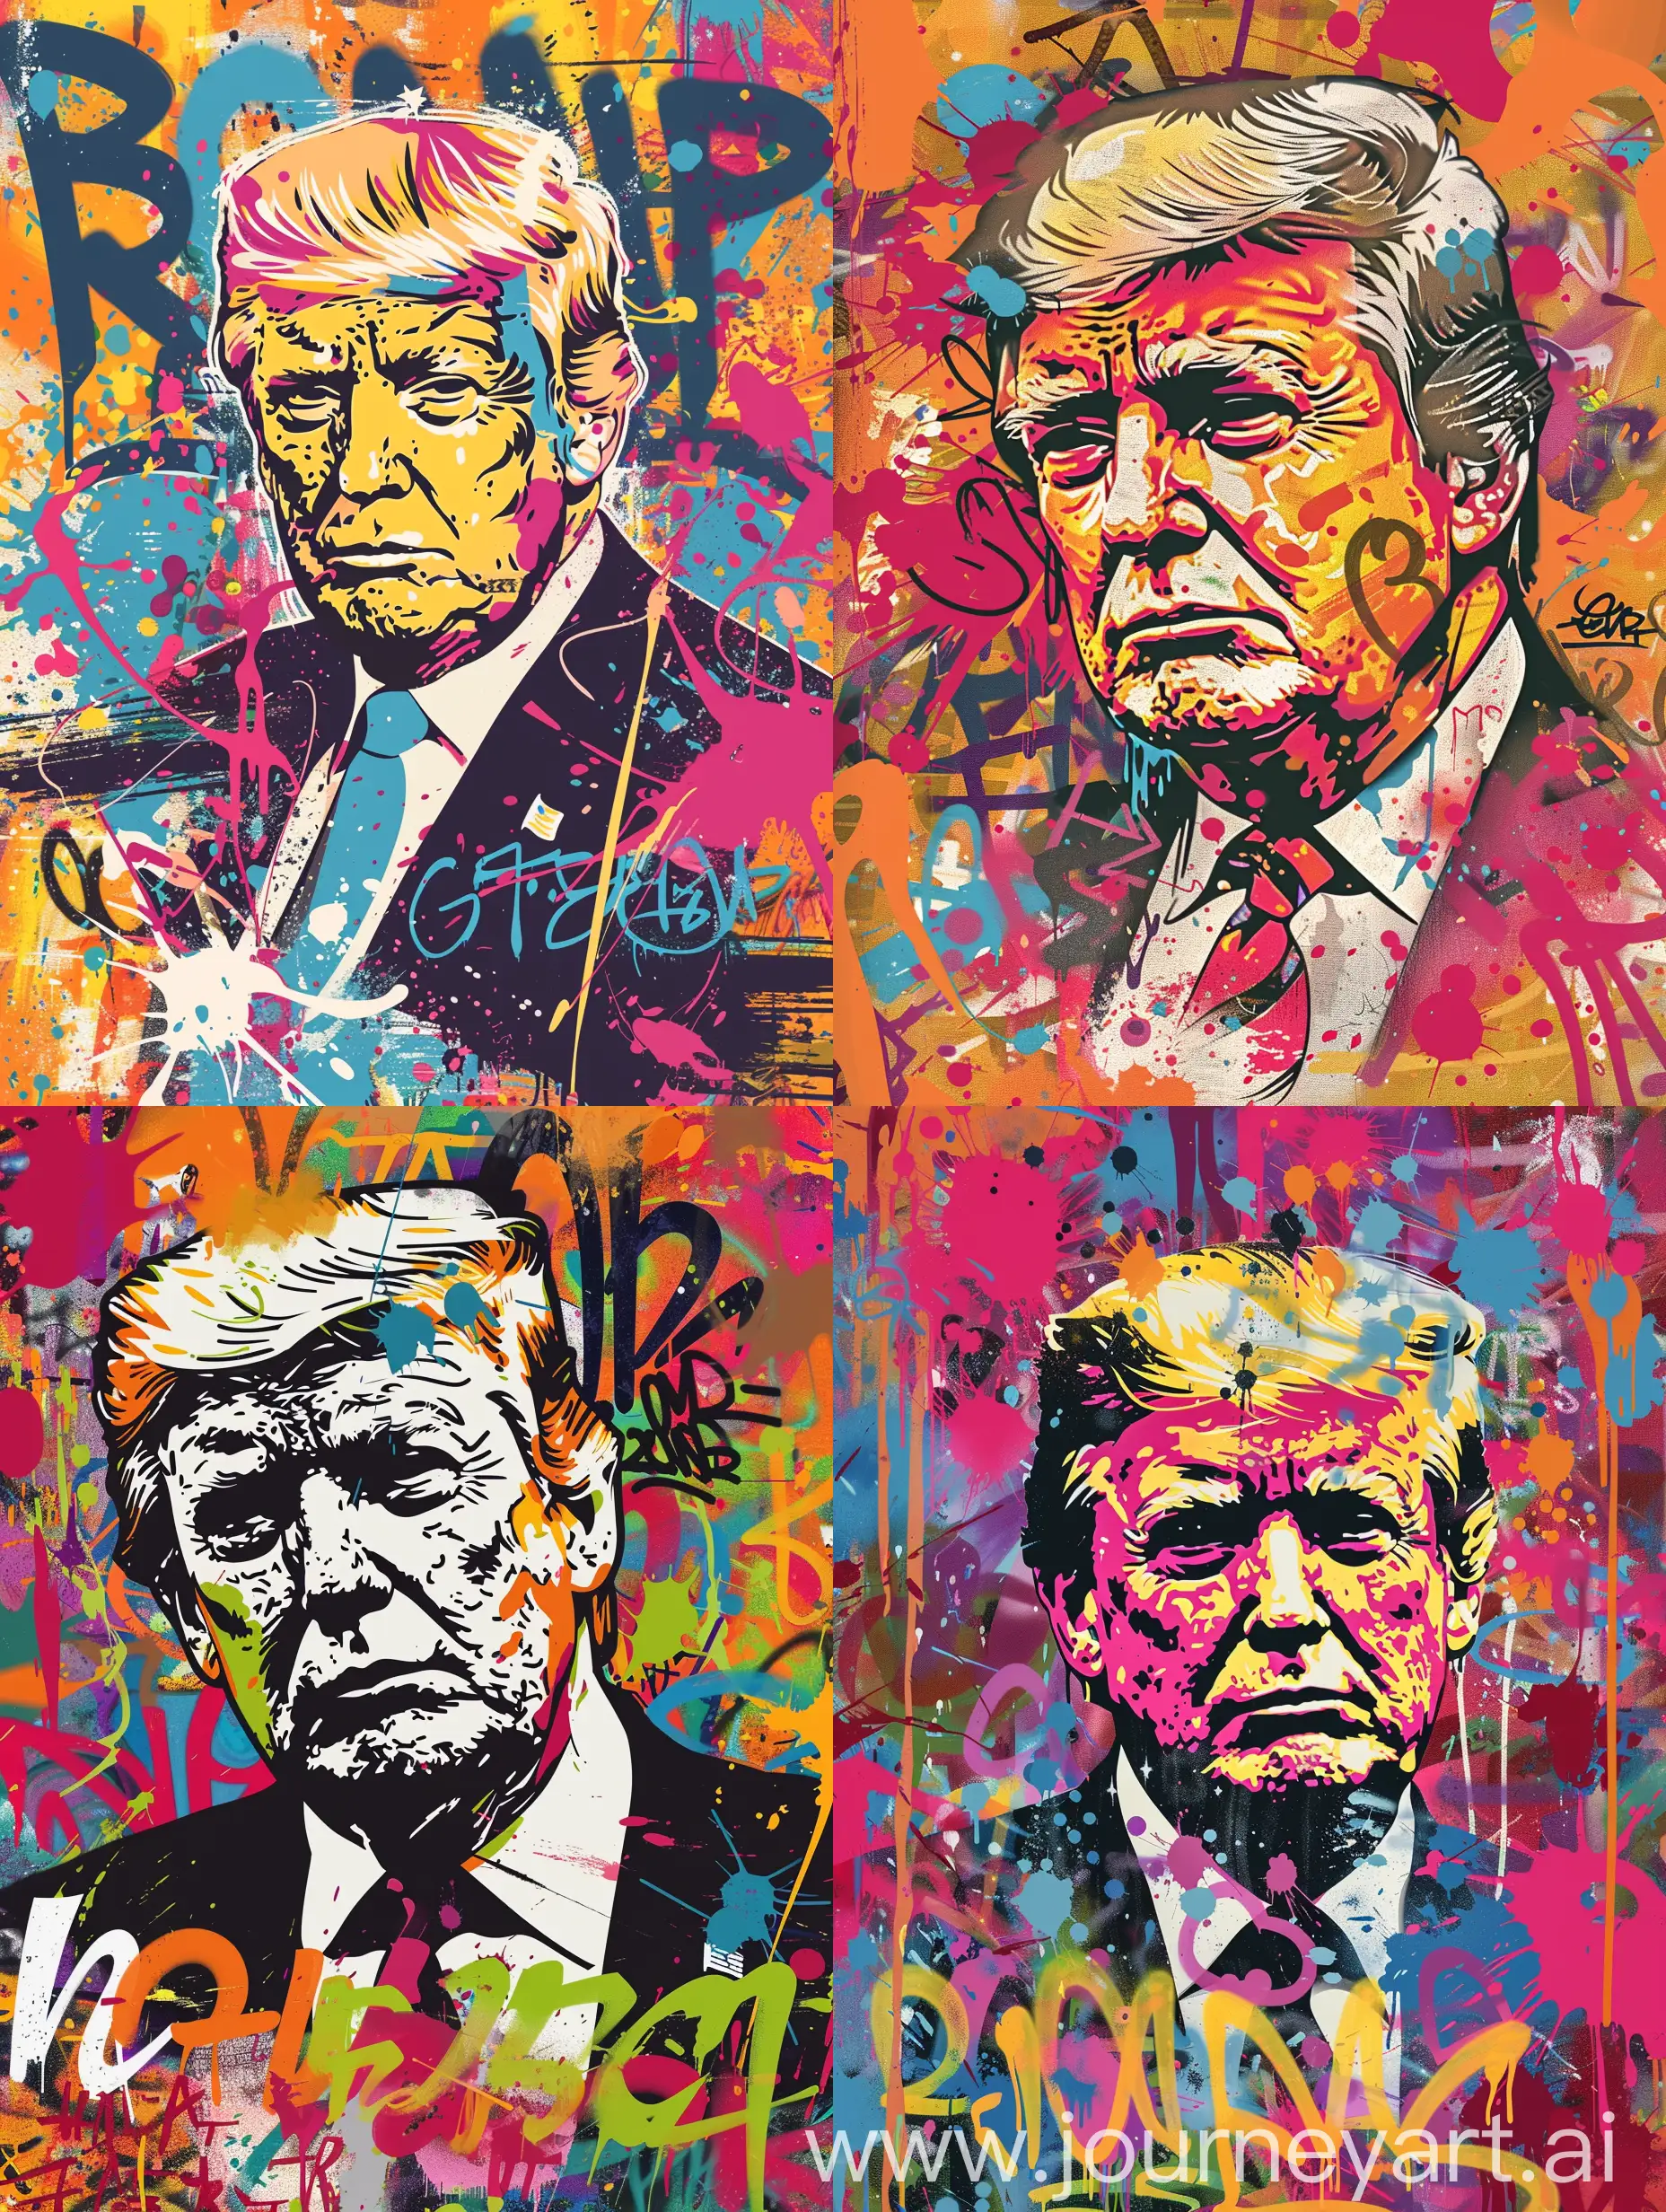 Urban-Graffiti-Portrait-of-President-Donald-Trump-on-Canvas